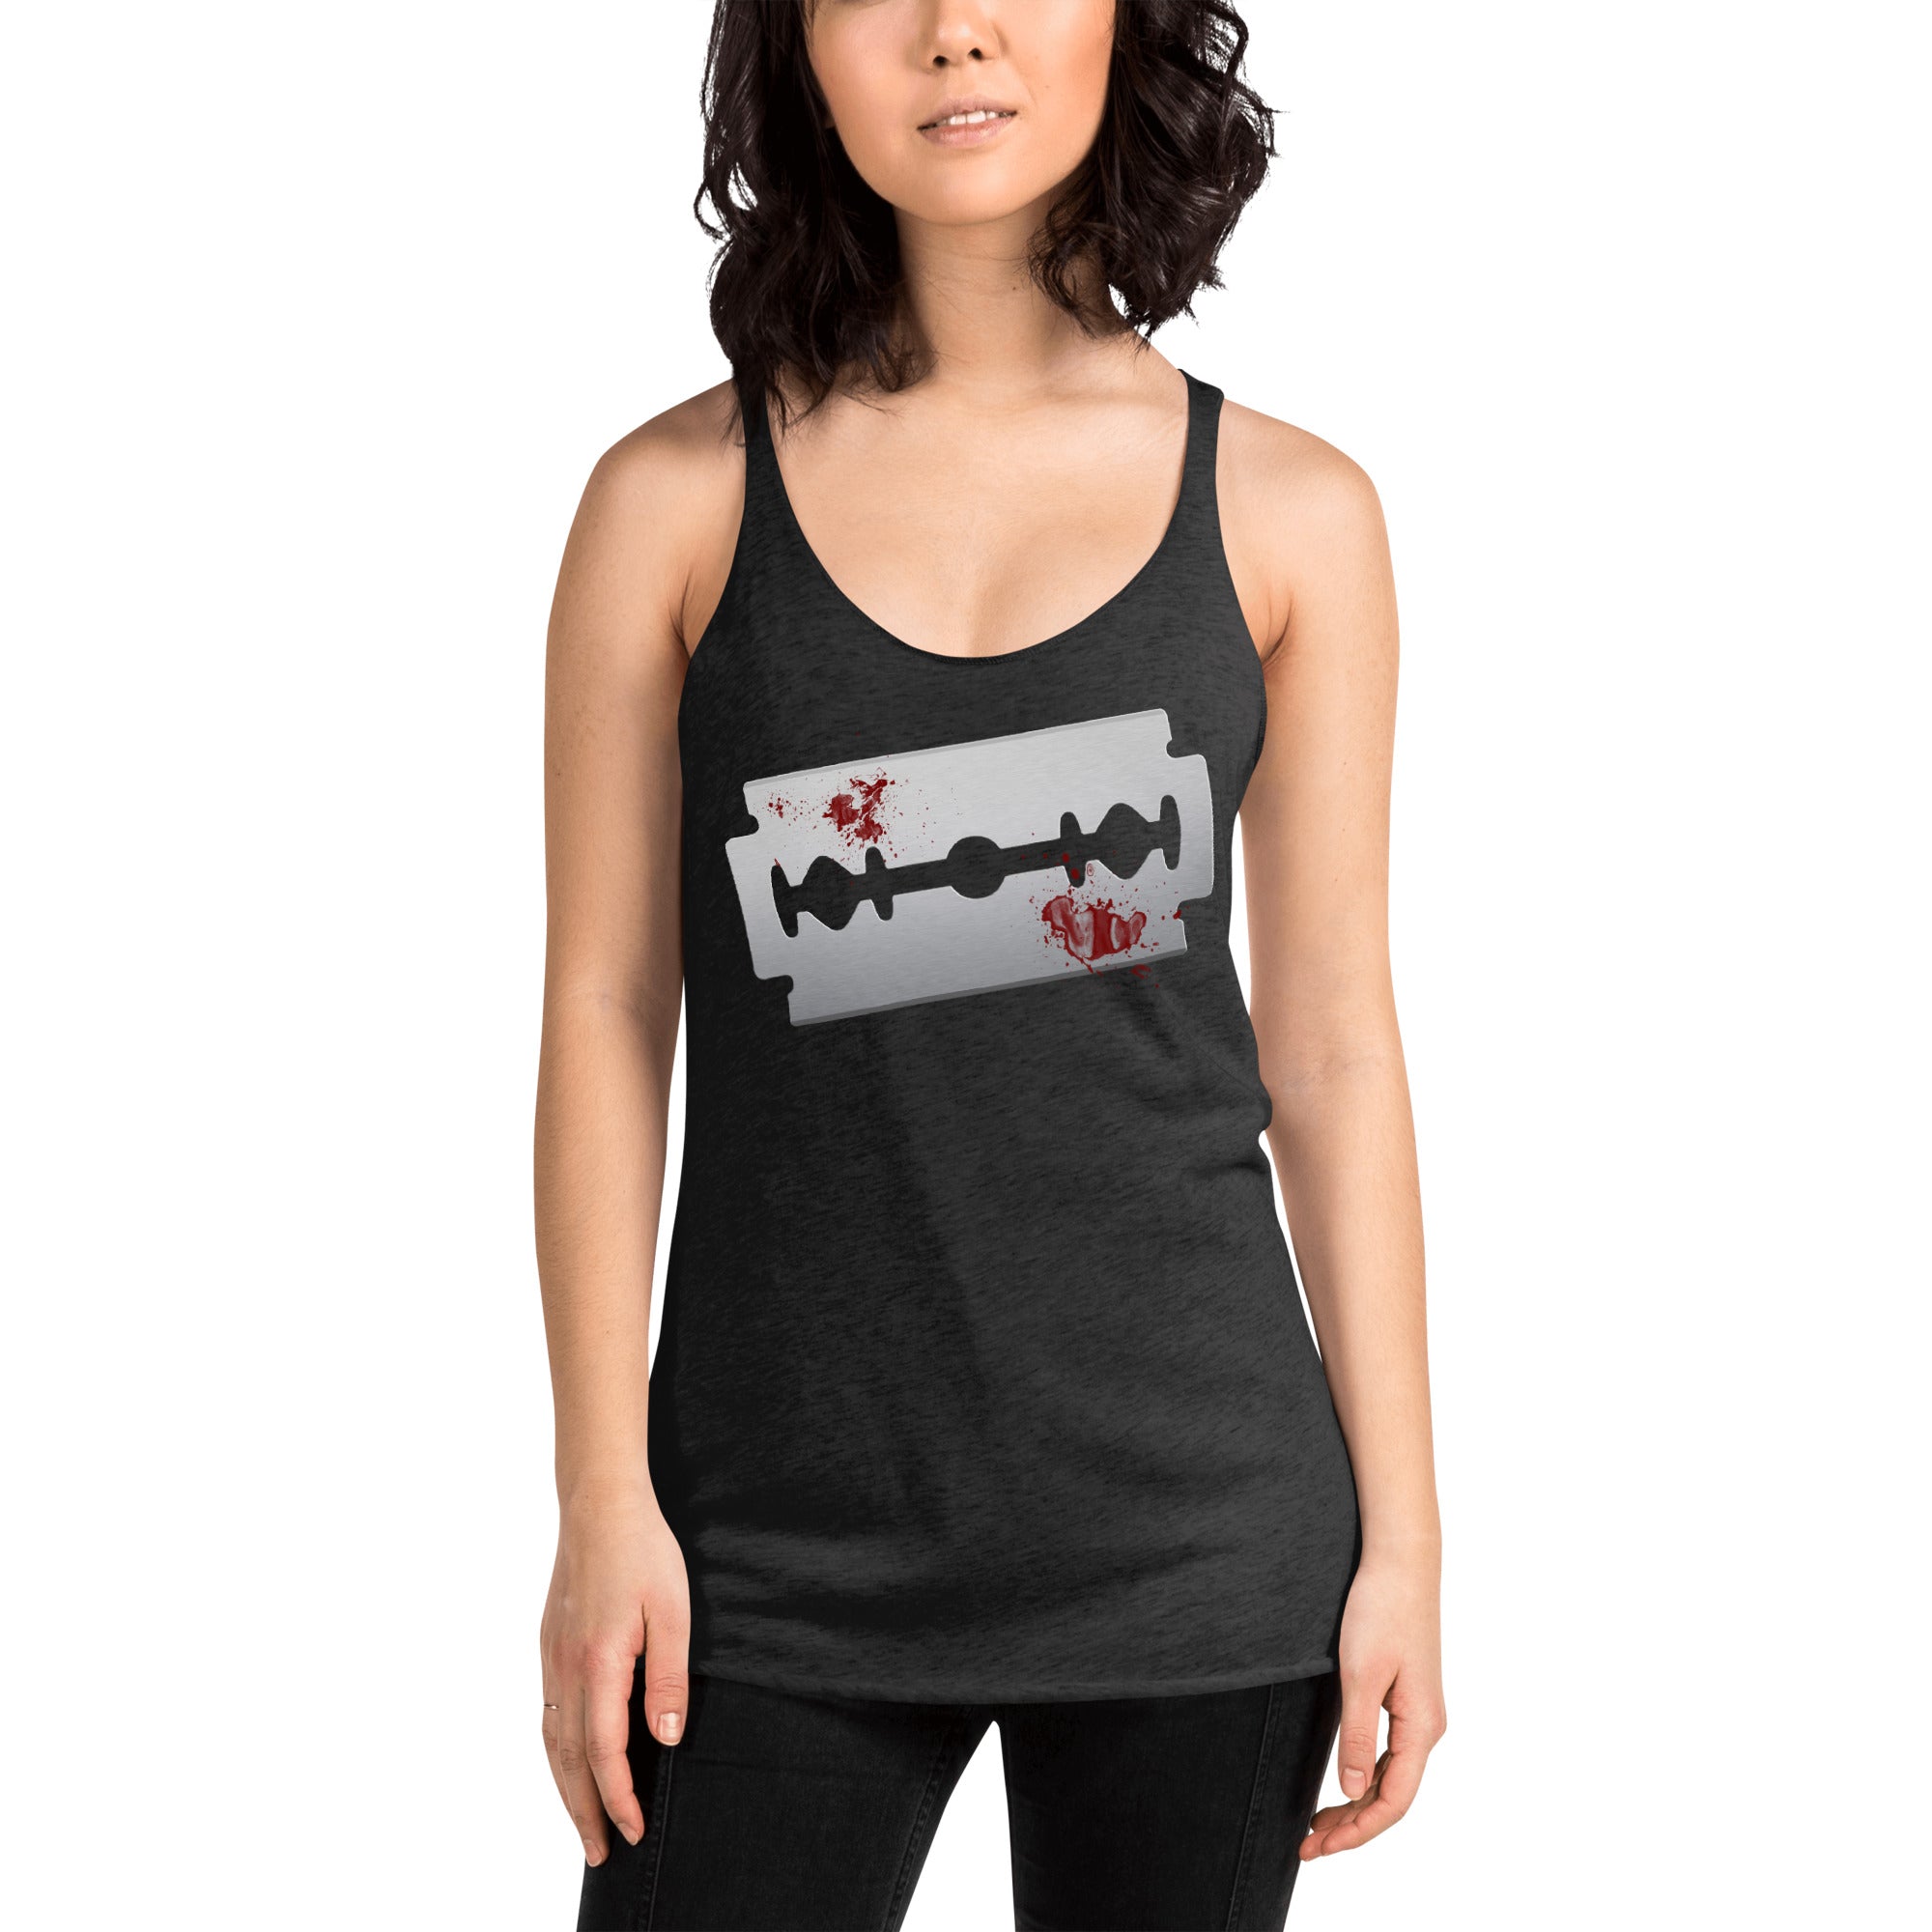 Blood Violin Bloody Razor Blade Horror Women's Racerback Tank Top Shirt - Edge of Life Designs